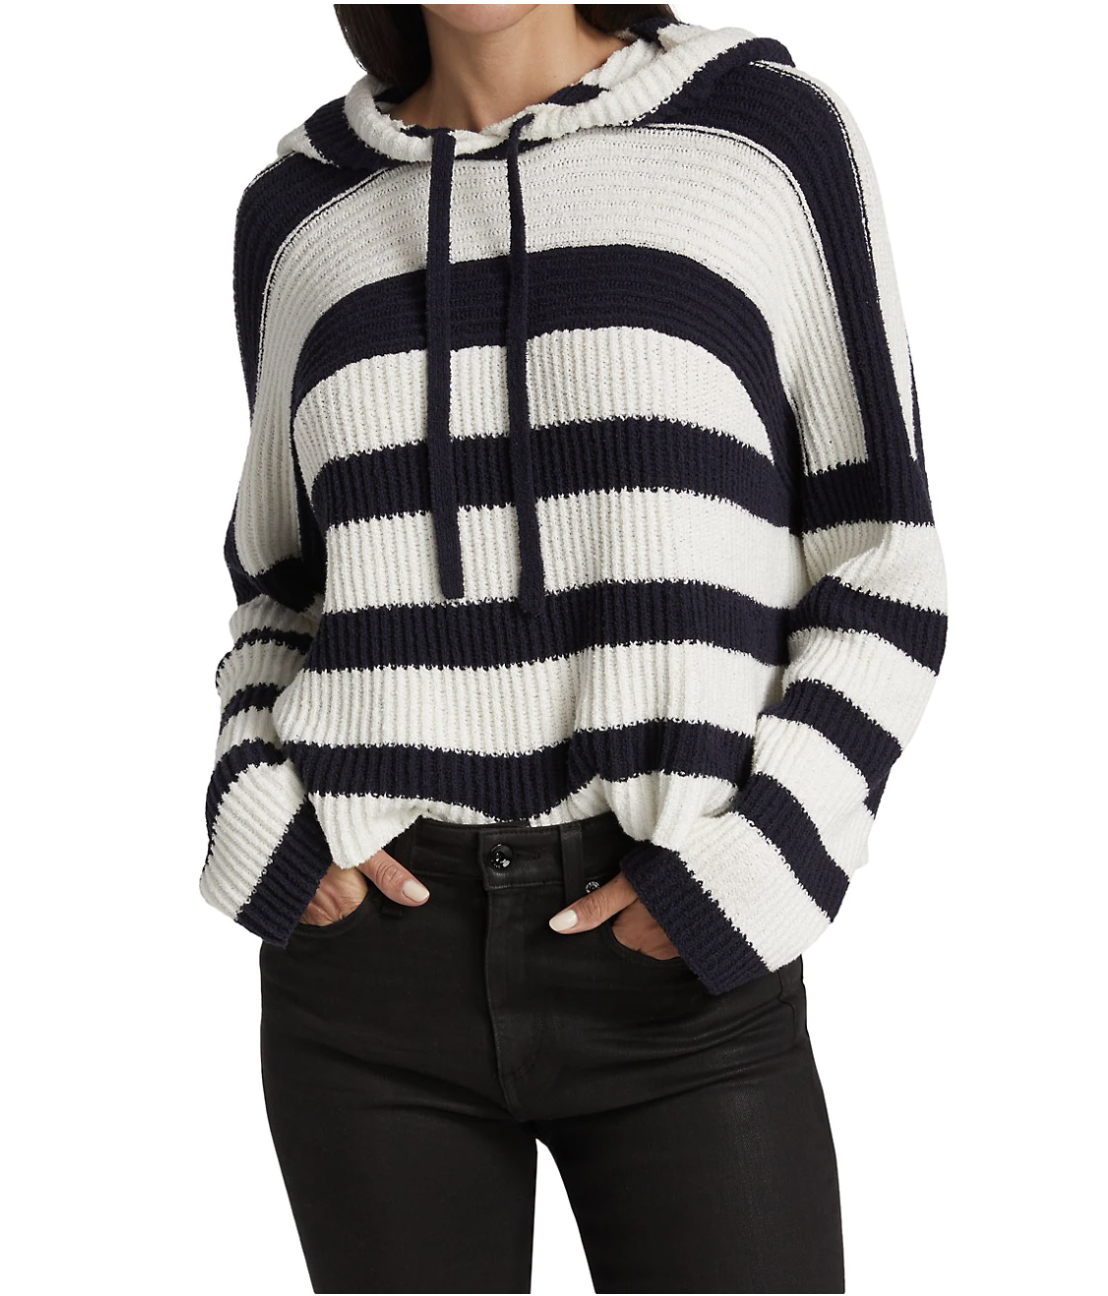 Handyulong Womens Hoodies Long Sleeve Cowl Neck Solid Color Asymmetric Irregular Casual Hooded Pullover Sweatshirts